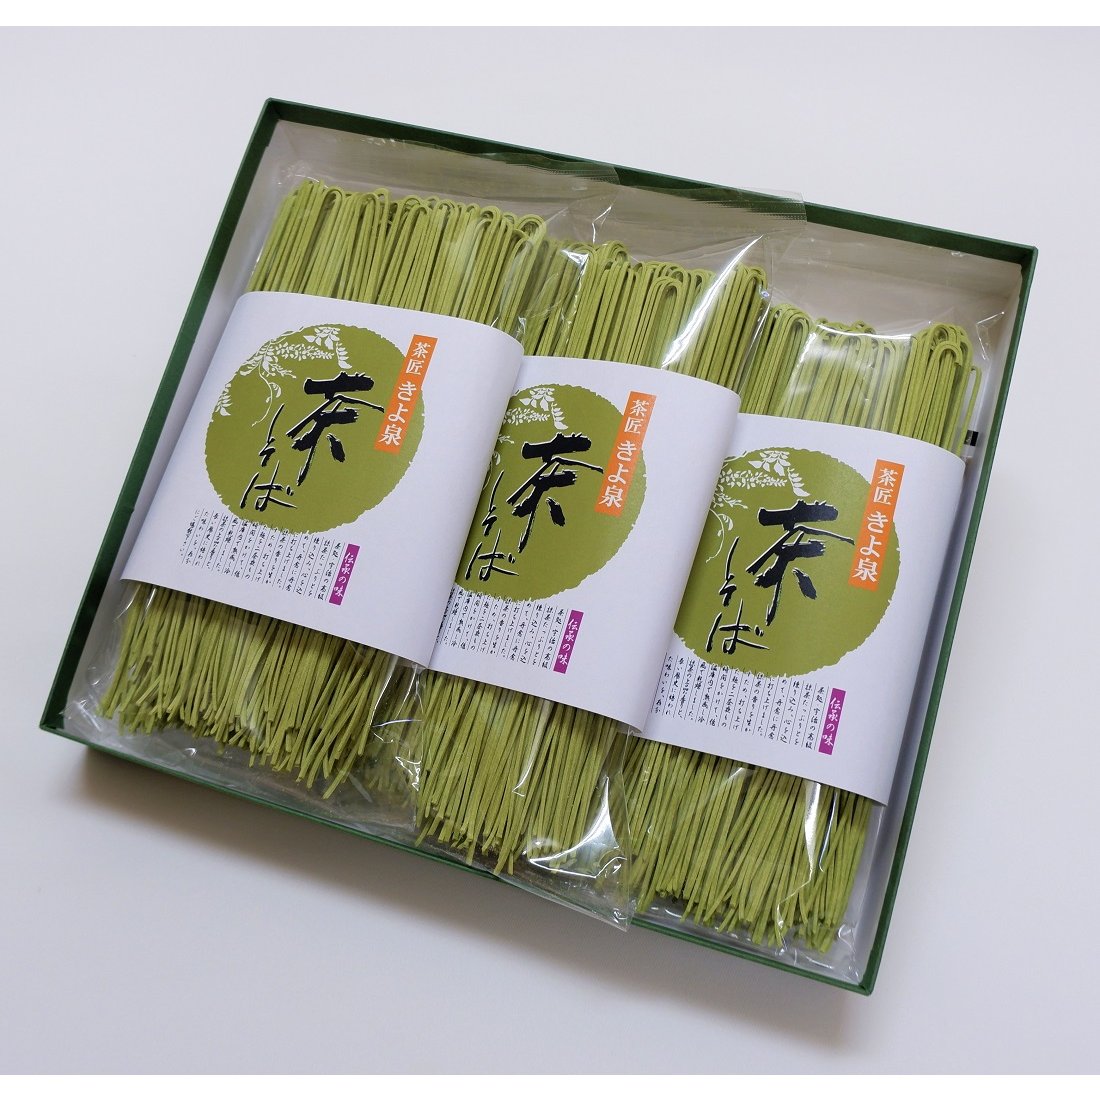 Kiyosen-Uji-Matcha-Authentic-Green-Tea-Soba-Noodles-6-Servings-1-2024-02-16T01:48:20.174Z.jpg